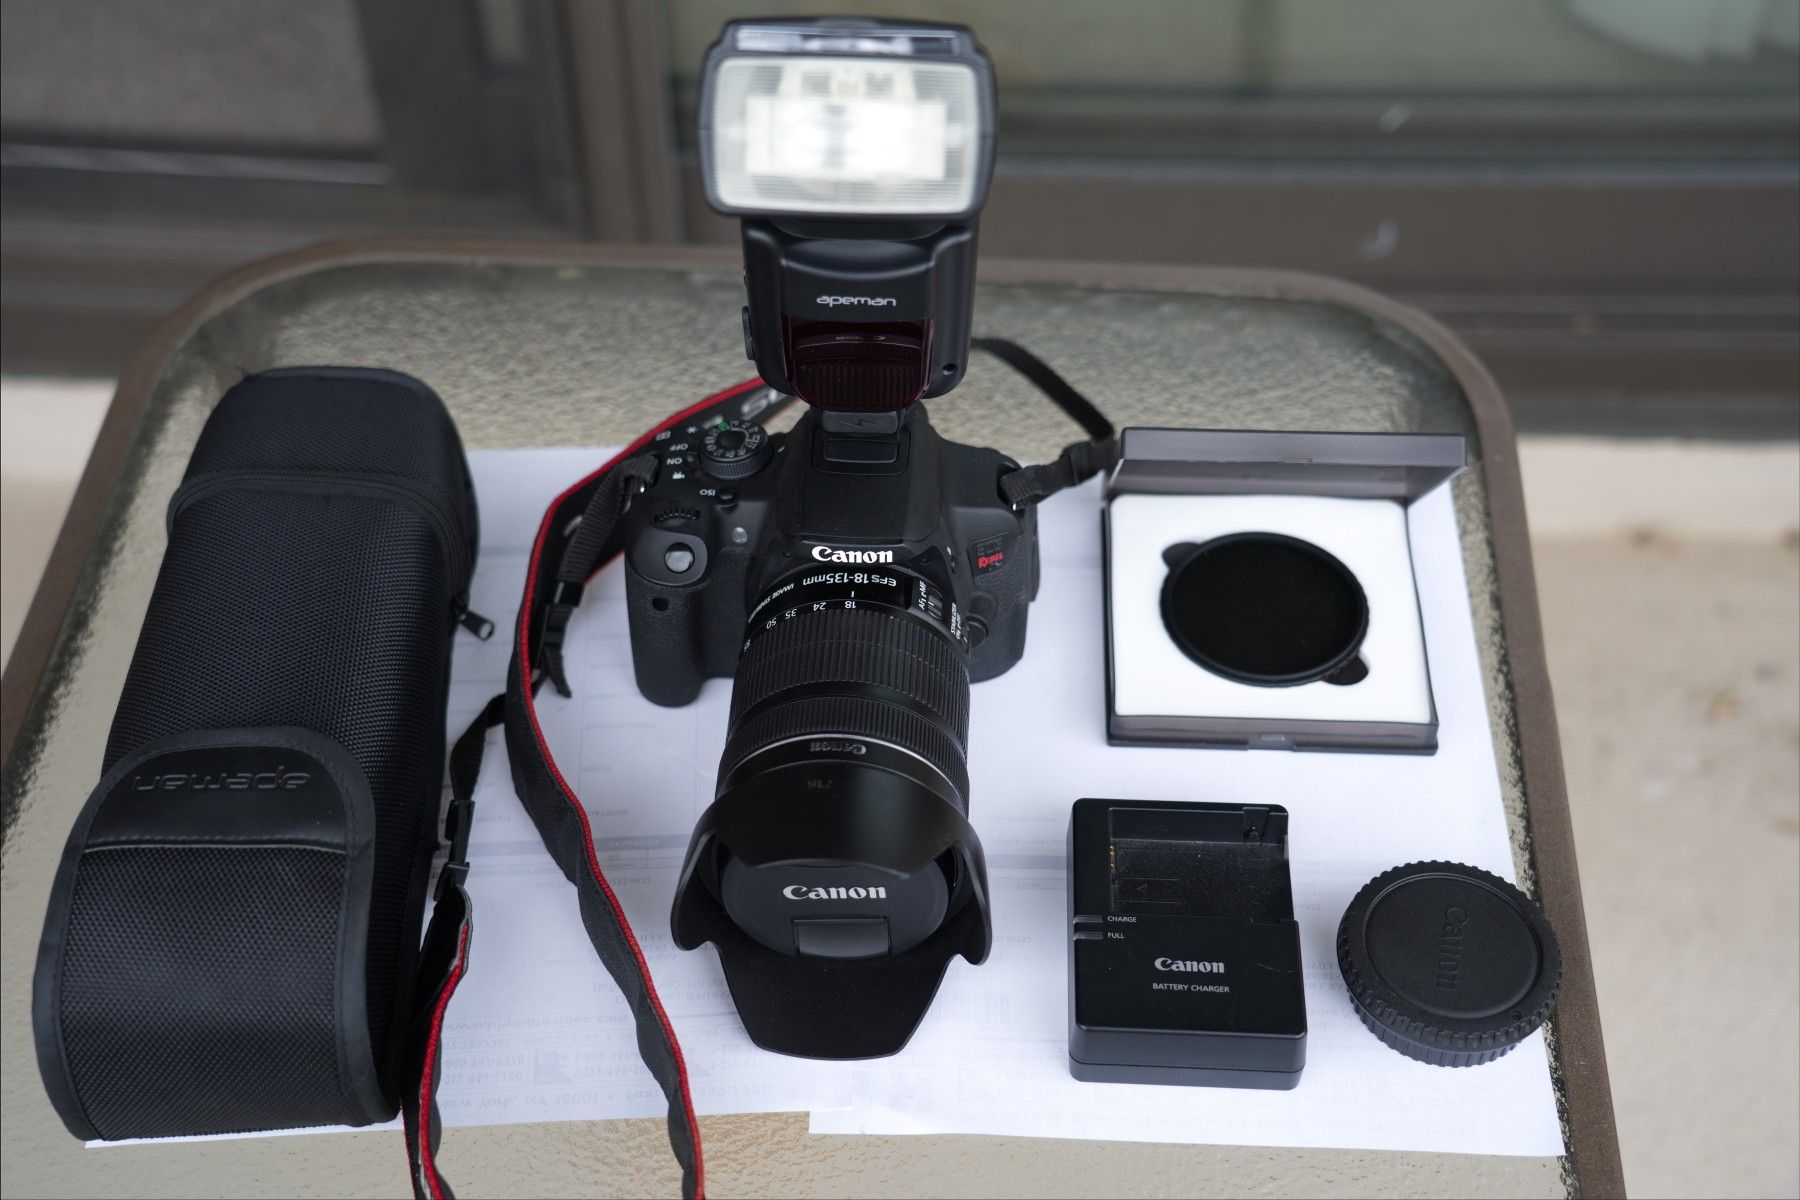 Canon EOS Rebel T5i DSLR + 18-135mm f/3.5-5.6 IS STM Lens + Others